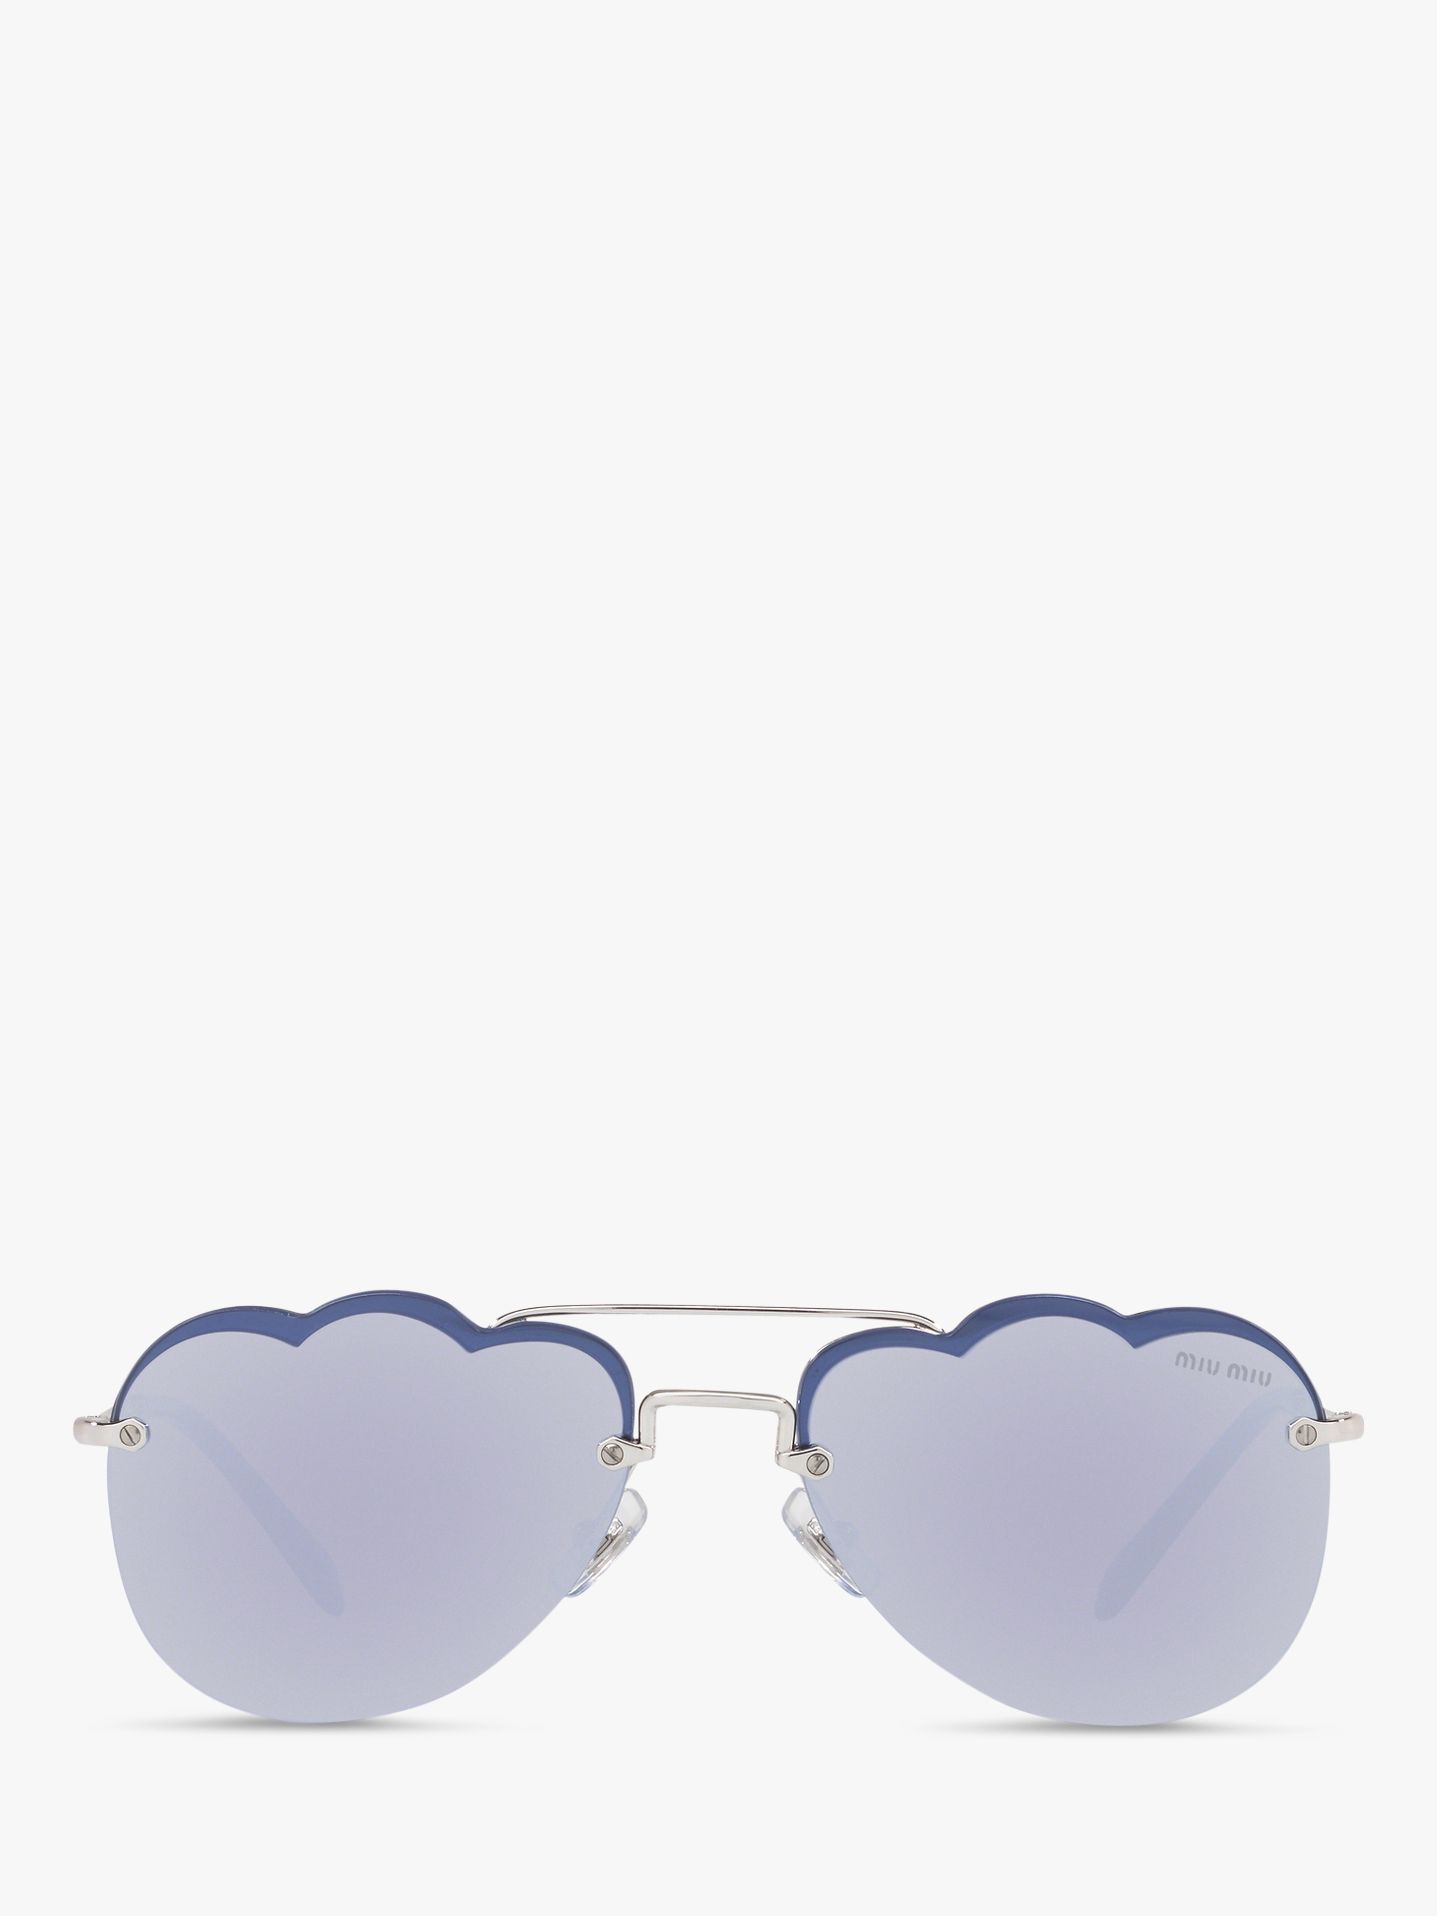 Buy Miu Miu MU 56US Women's Scalloped Aviator Sunglasses, Silver/Pink Online at johnlewis.com